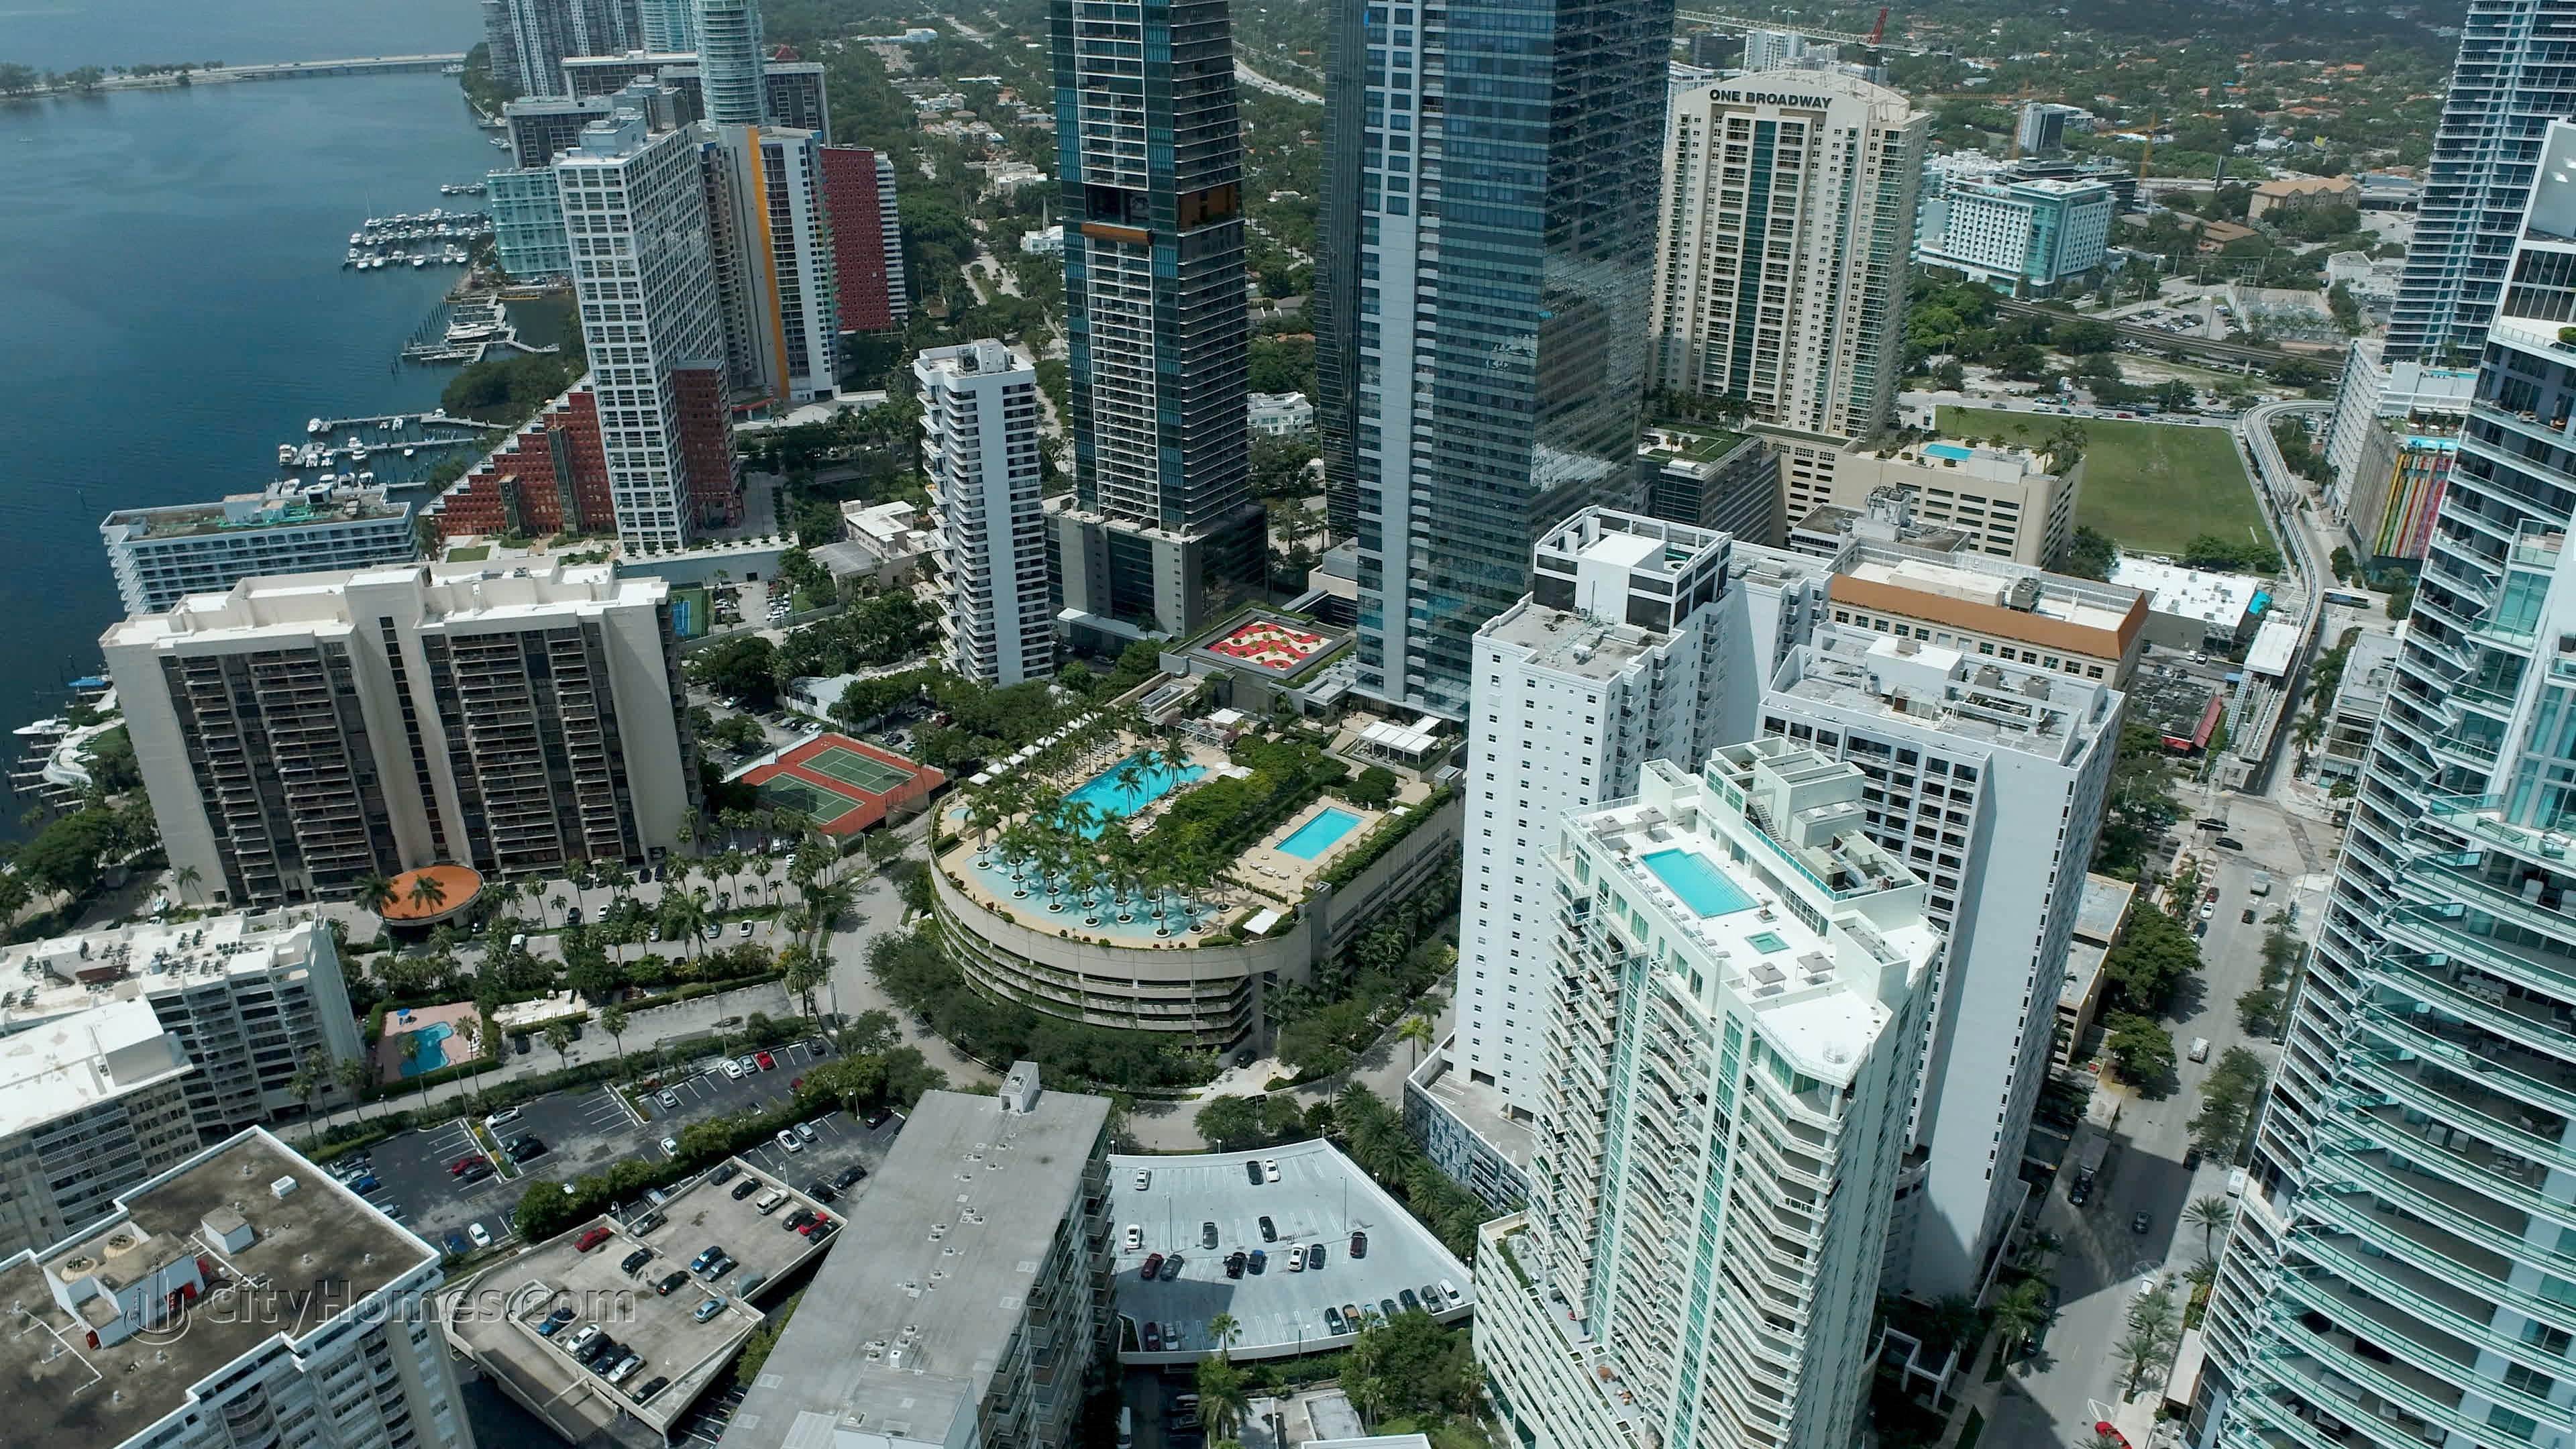 2. Four Seasons Condo Hotel building at 1435 Brickell Avenue, Brickell, Miami, FL 33131